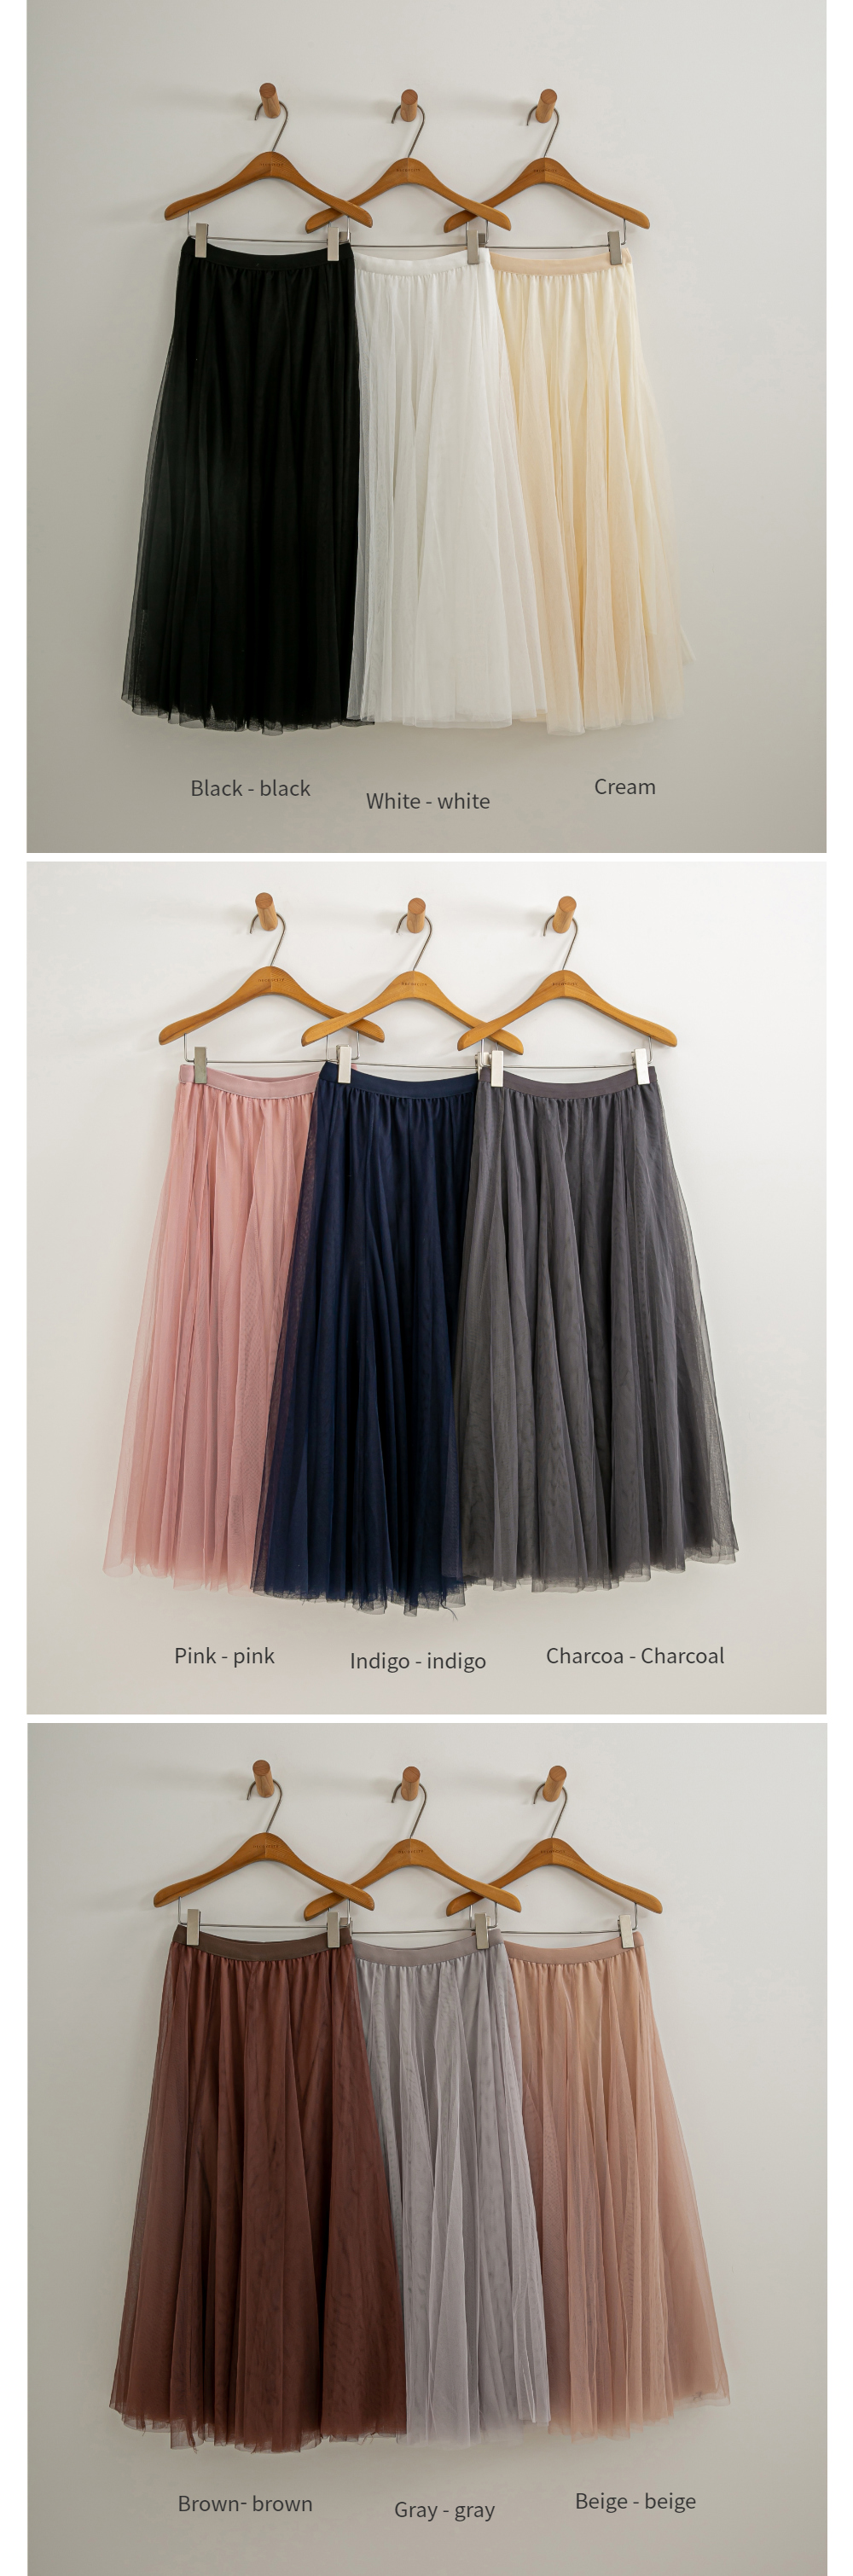 mini skirt charcoal color image-S1L57